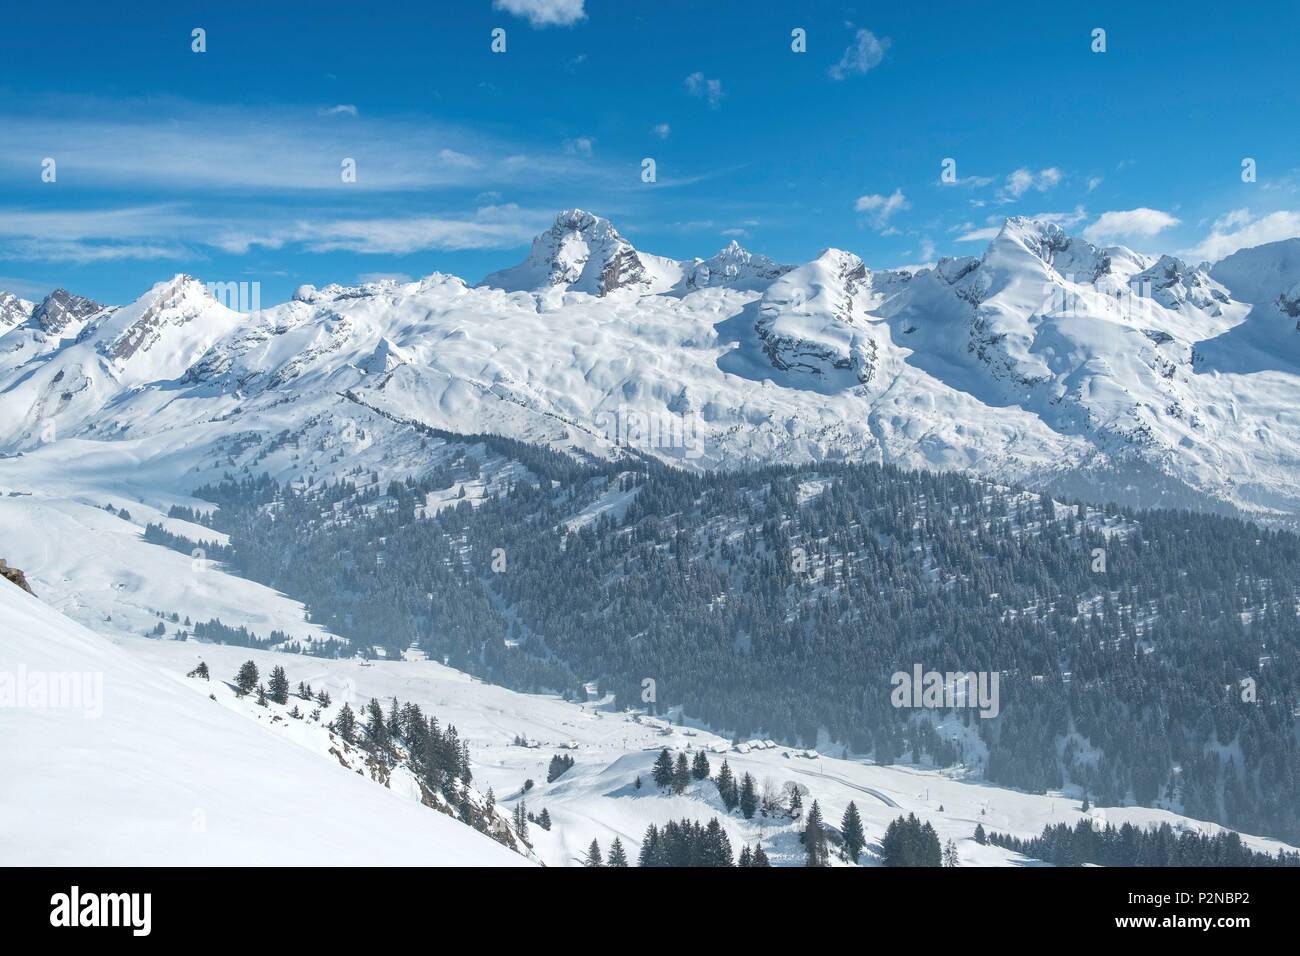 France, Haute Savoie, Le Grand Bornand, Chinaillon, la chaine des Aravis seen from the peaks of the slopes Stock Photo